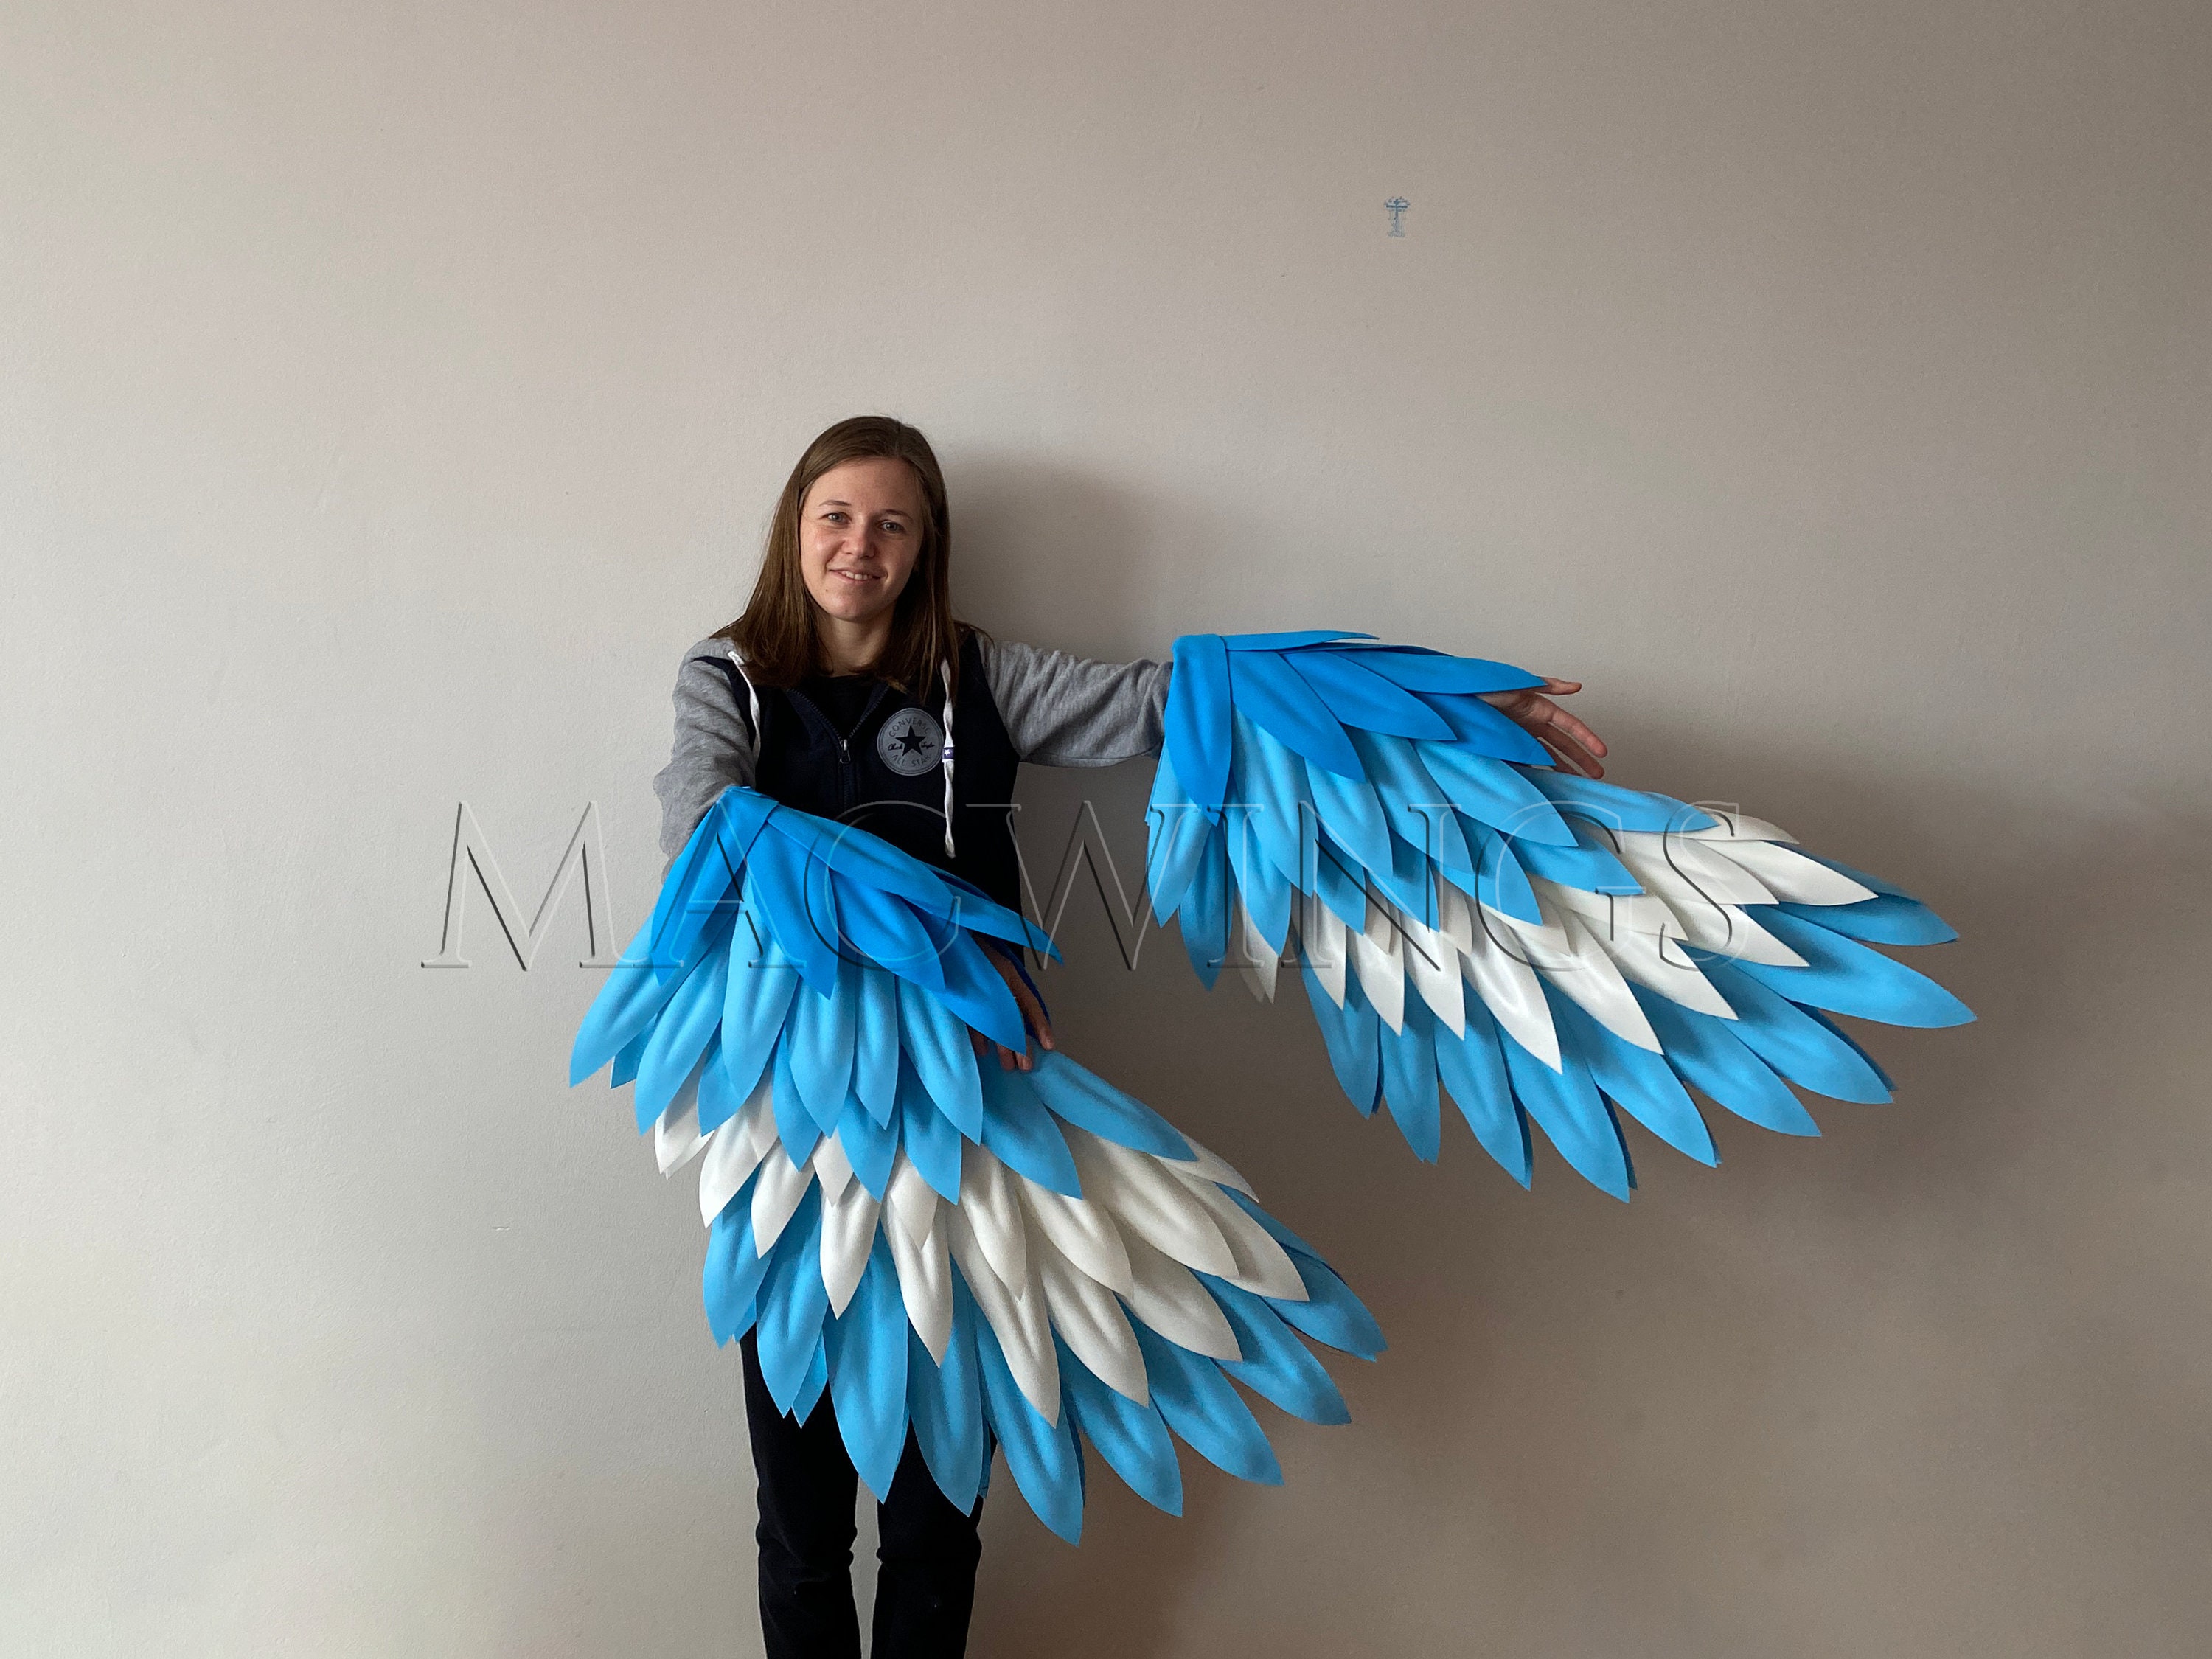 Blue Owl Costume, Bird Wings, Arms Wings, Bird Costume Cosplay